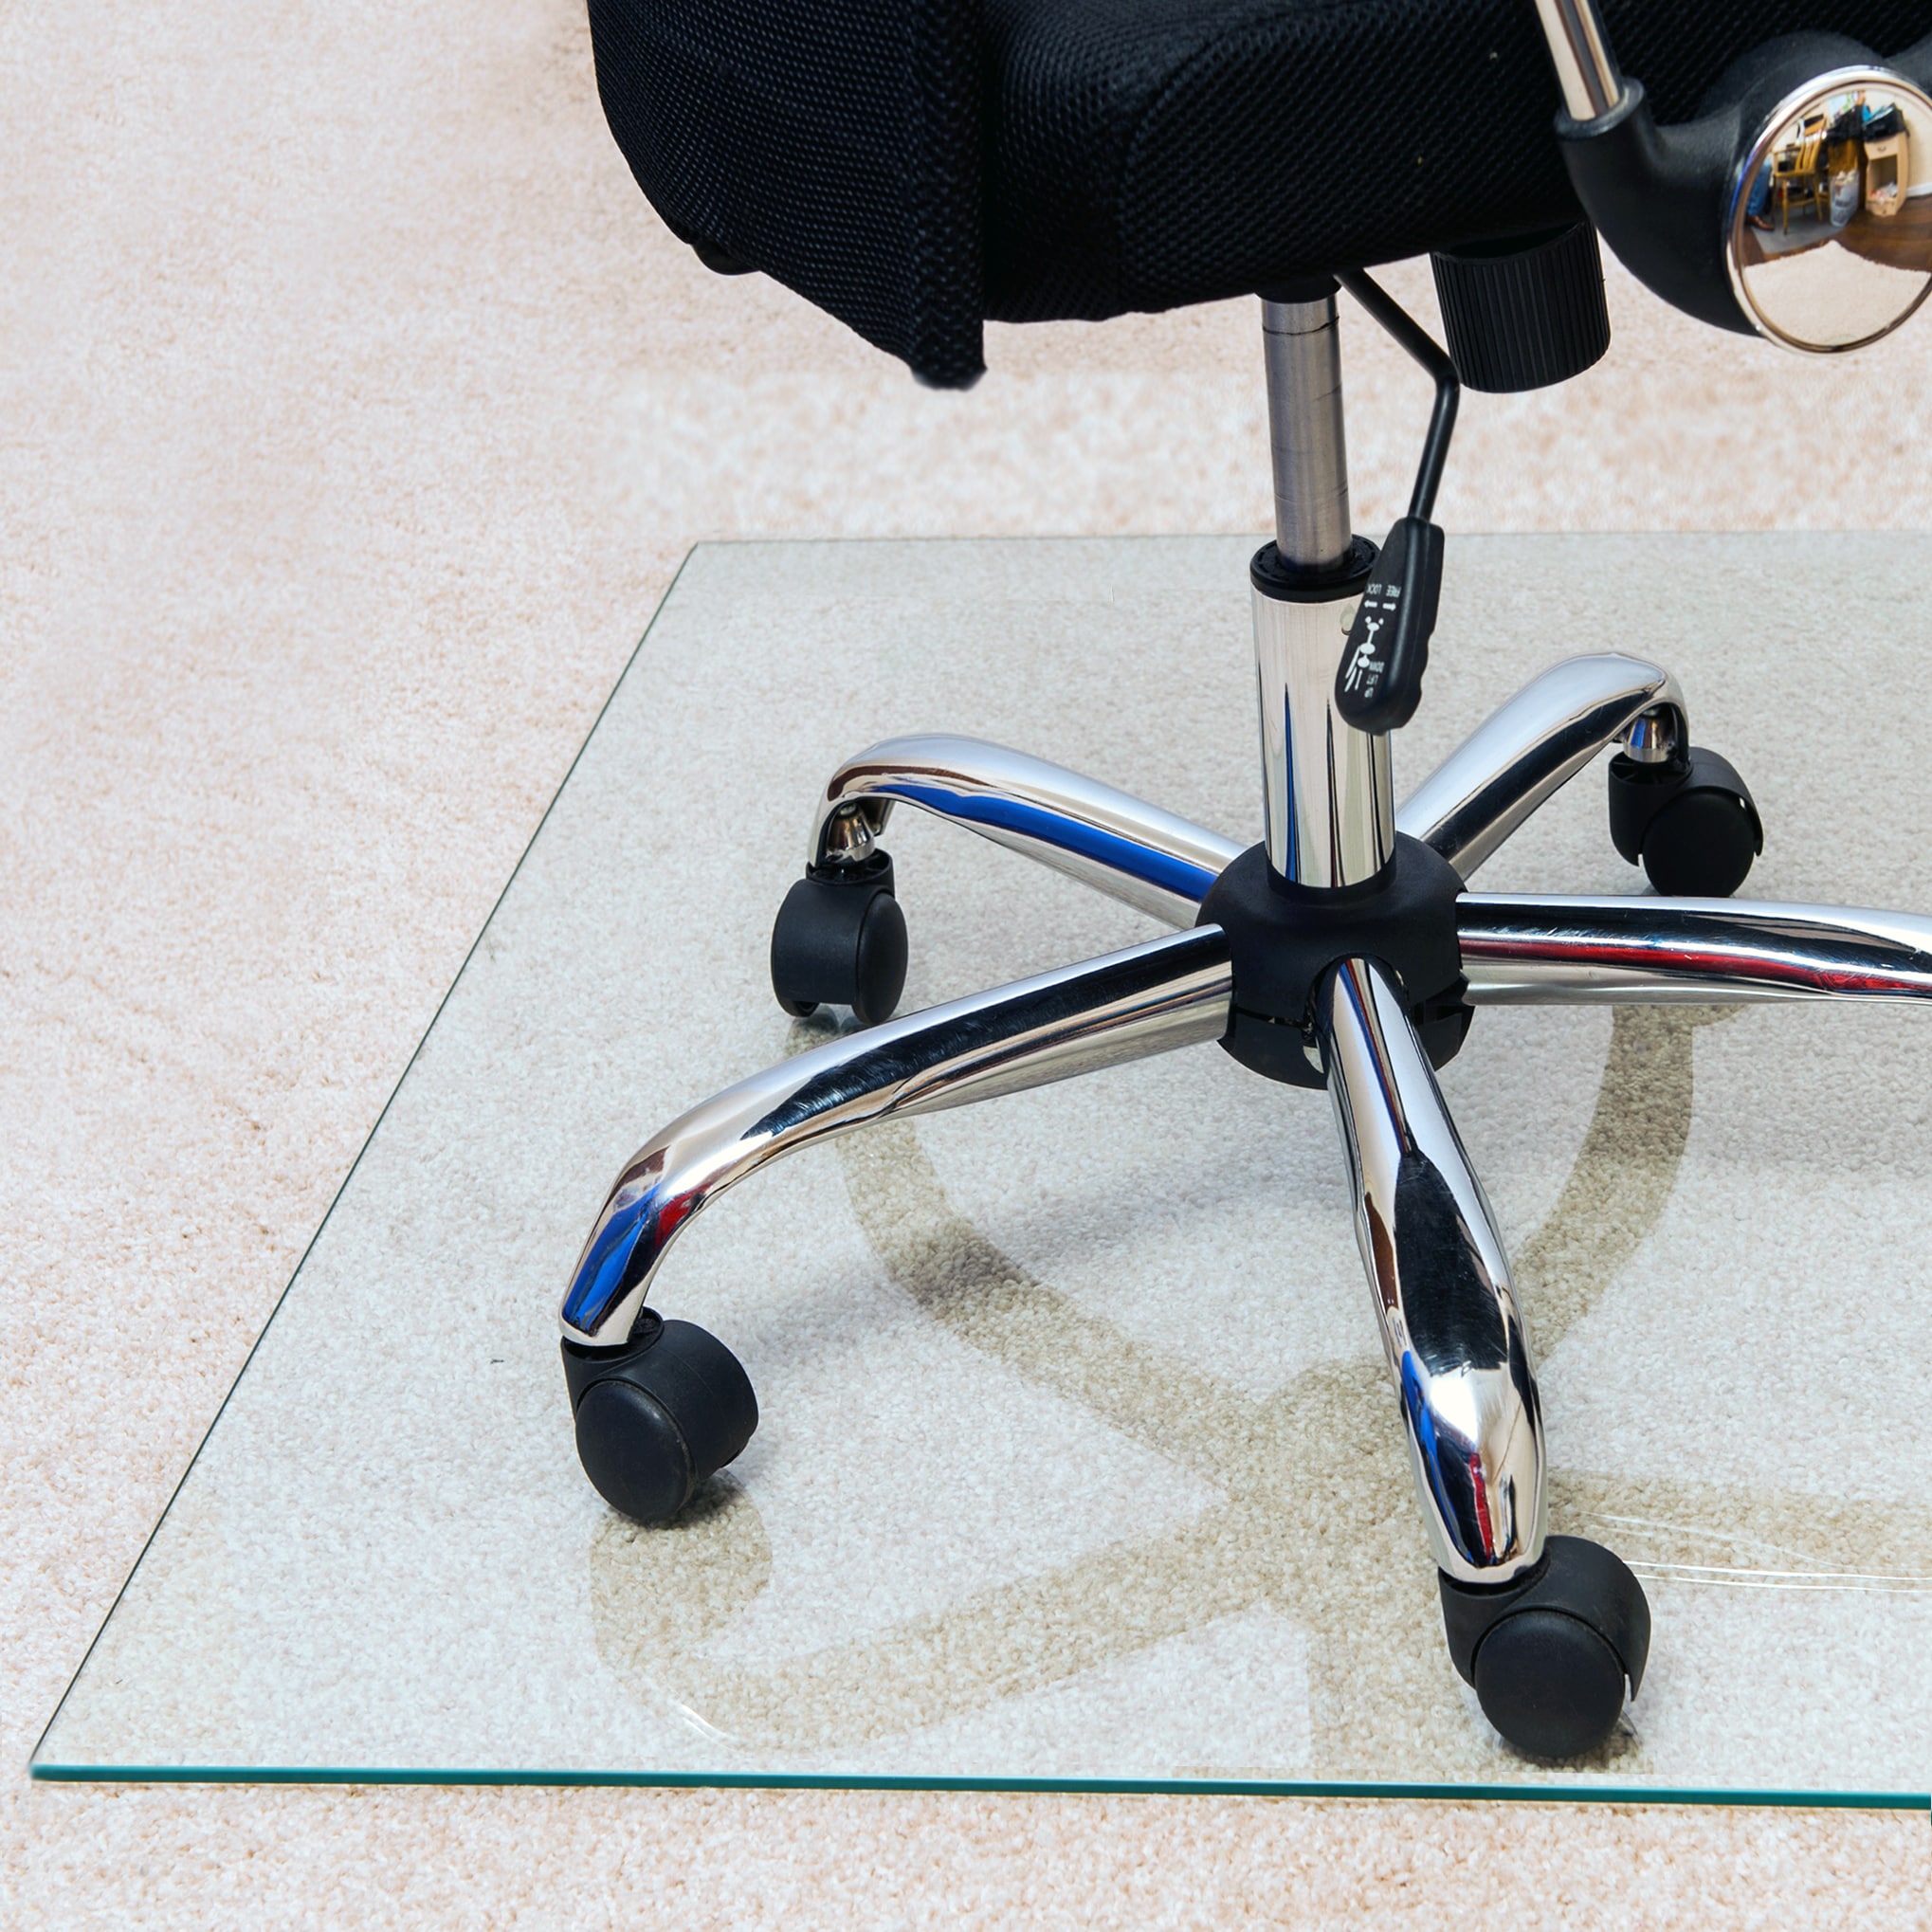 Mount-It Clear Desk Chair Mat